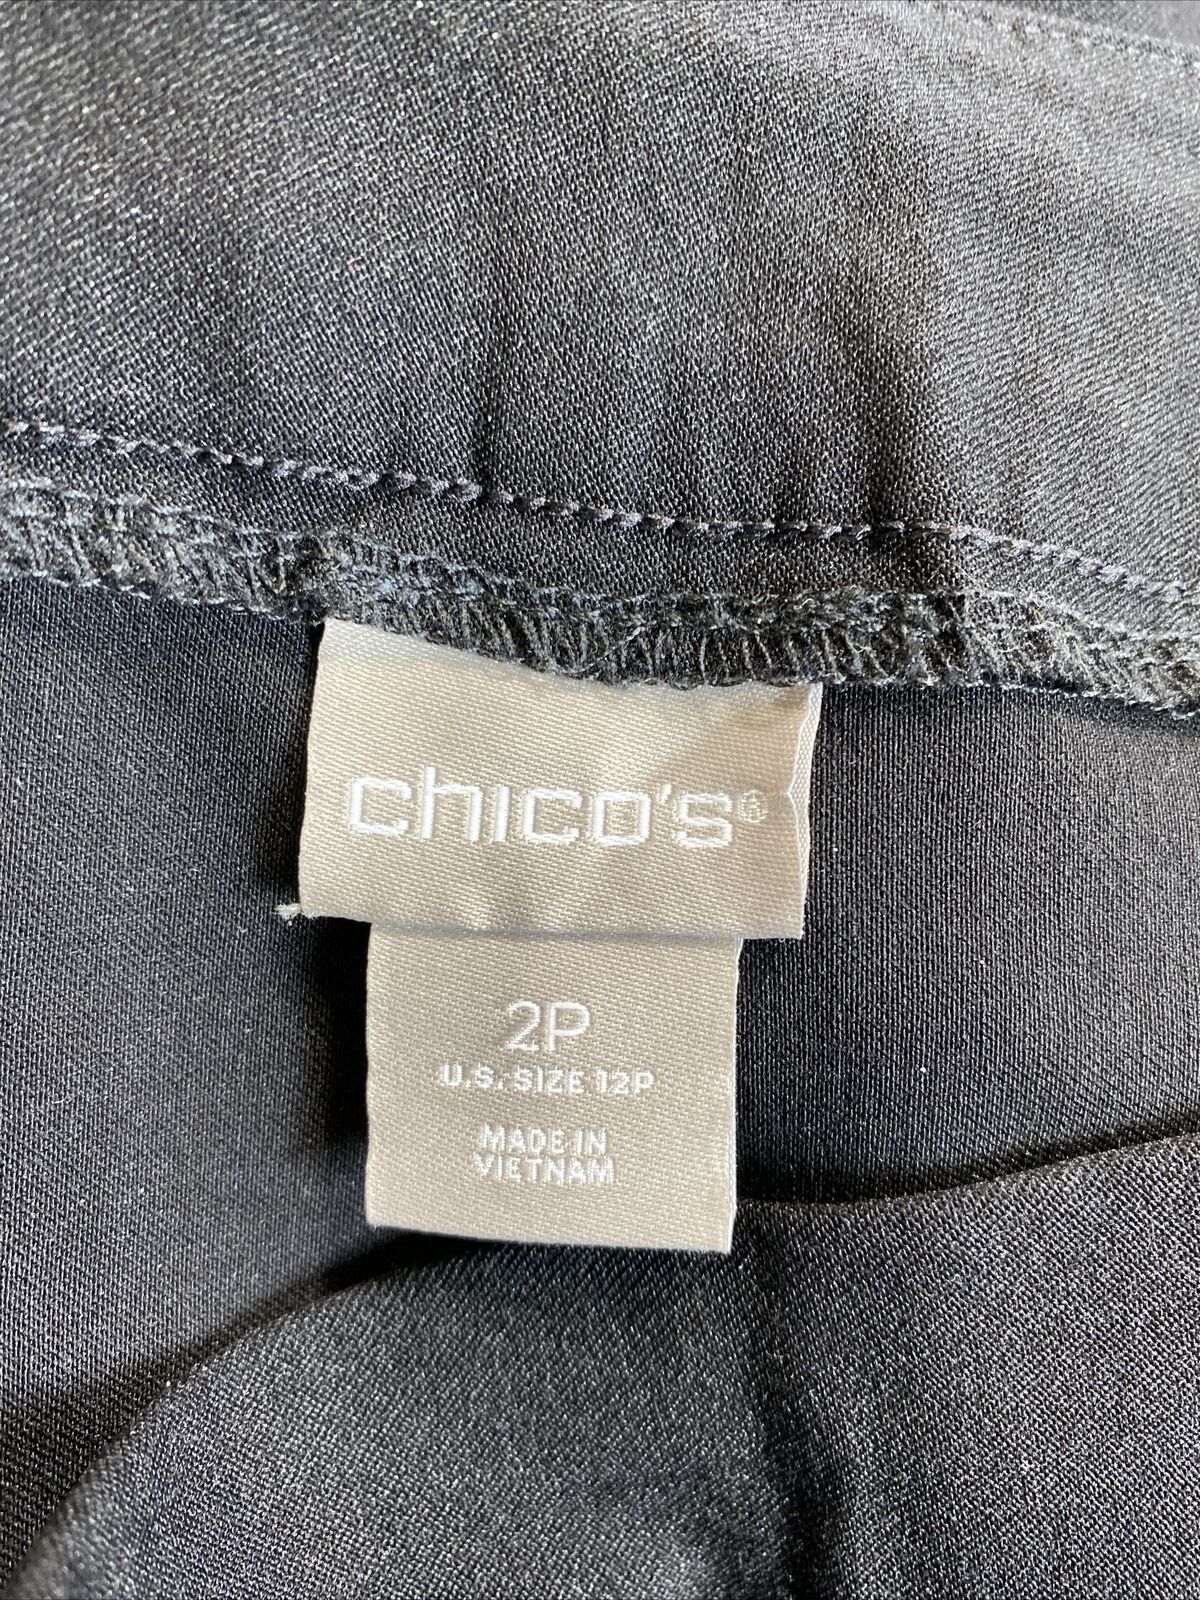 Chico's Women's Black Stretch Pull On Pants - Petite 2/US 12P